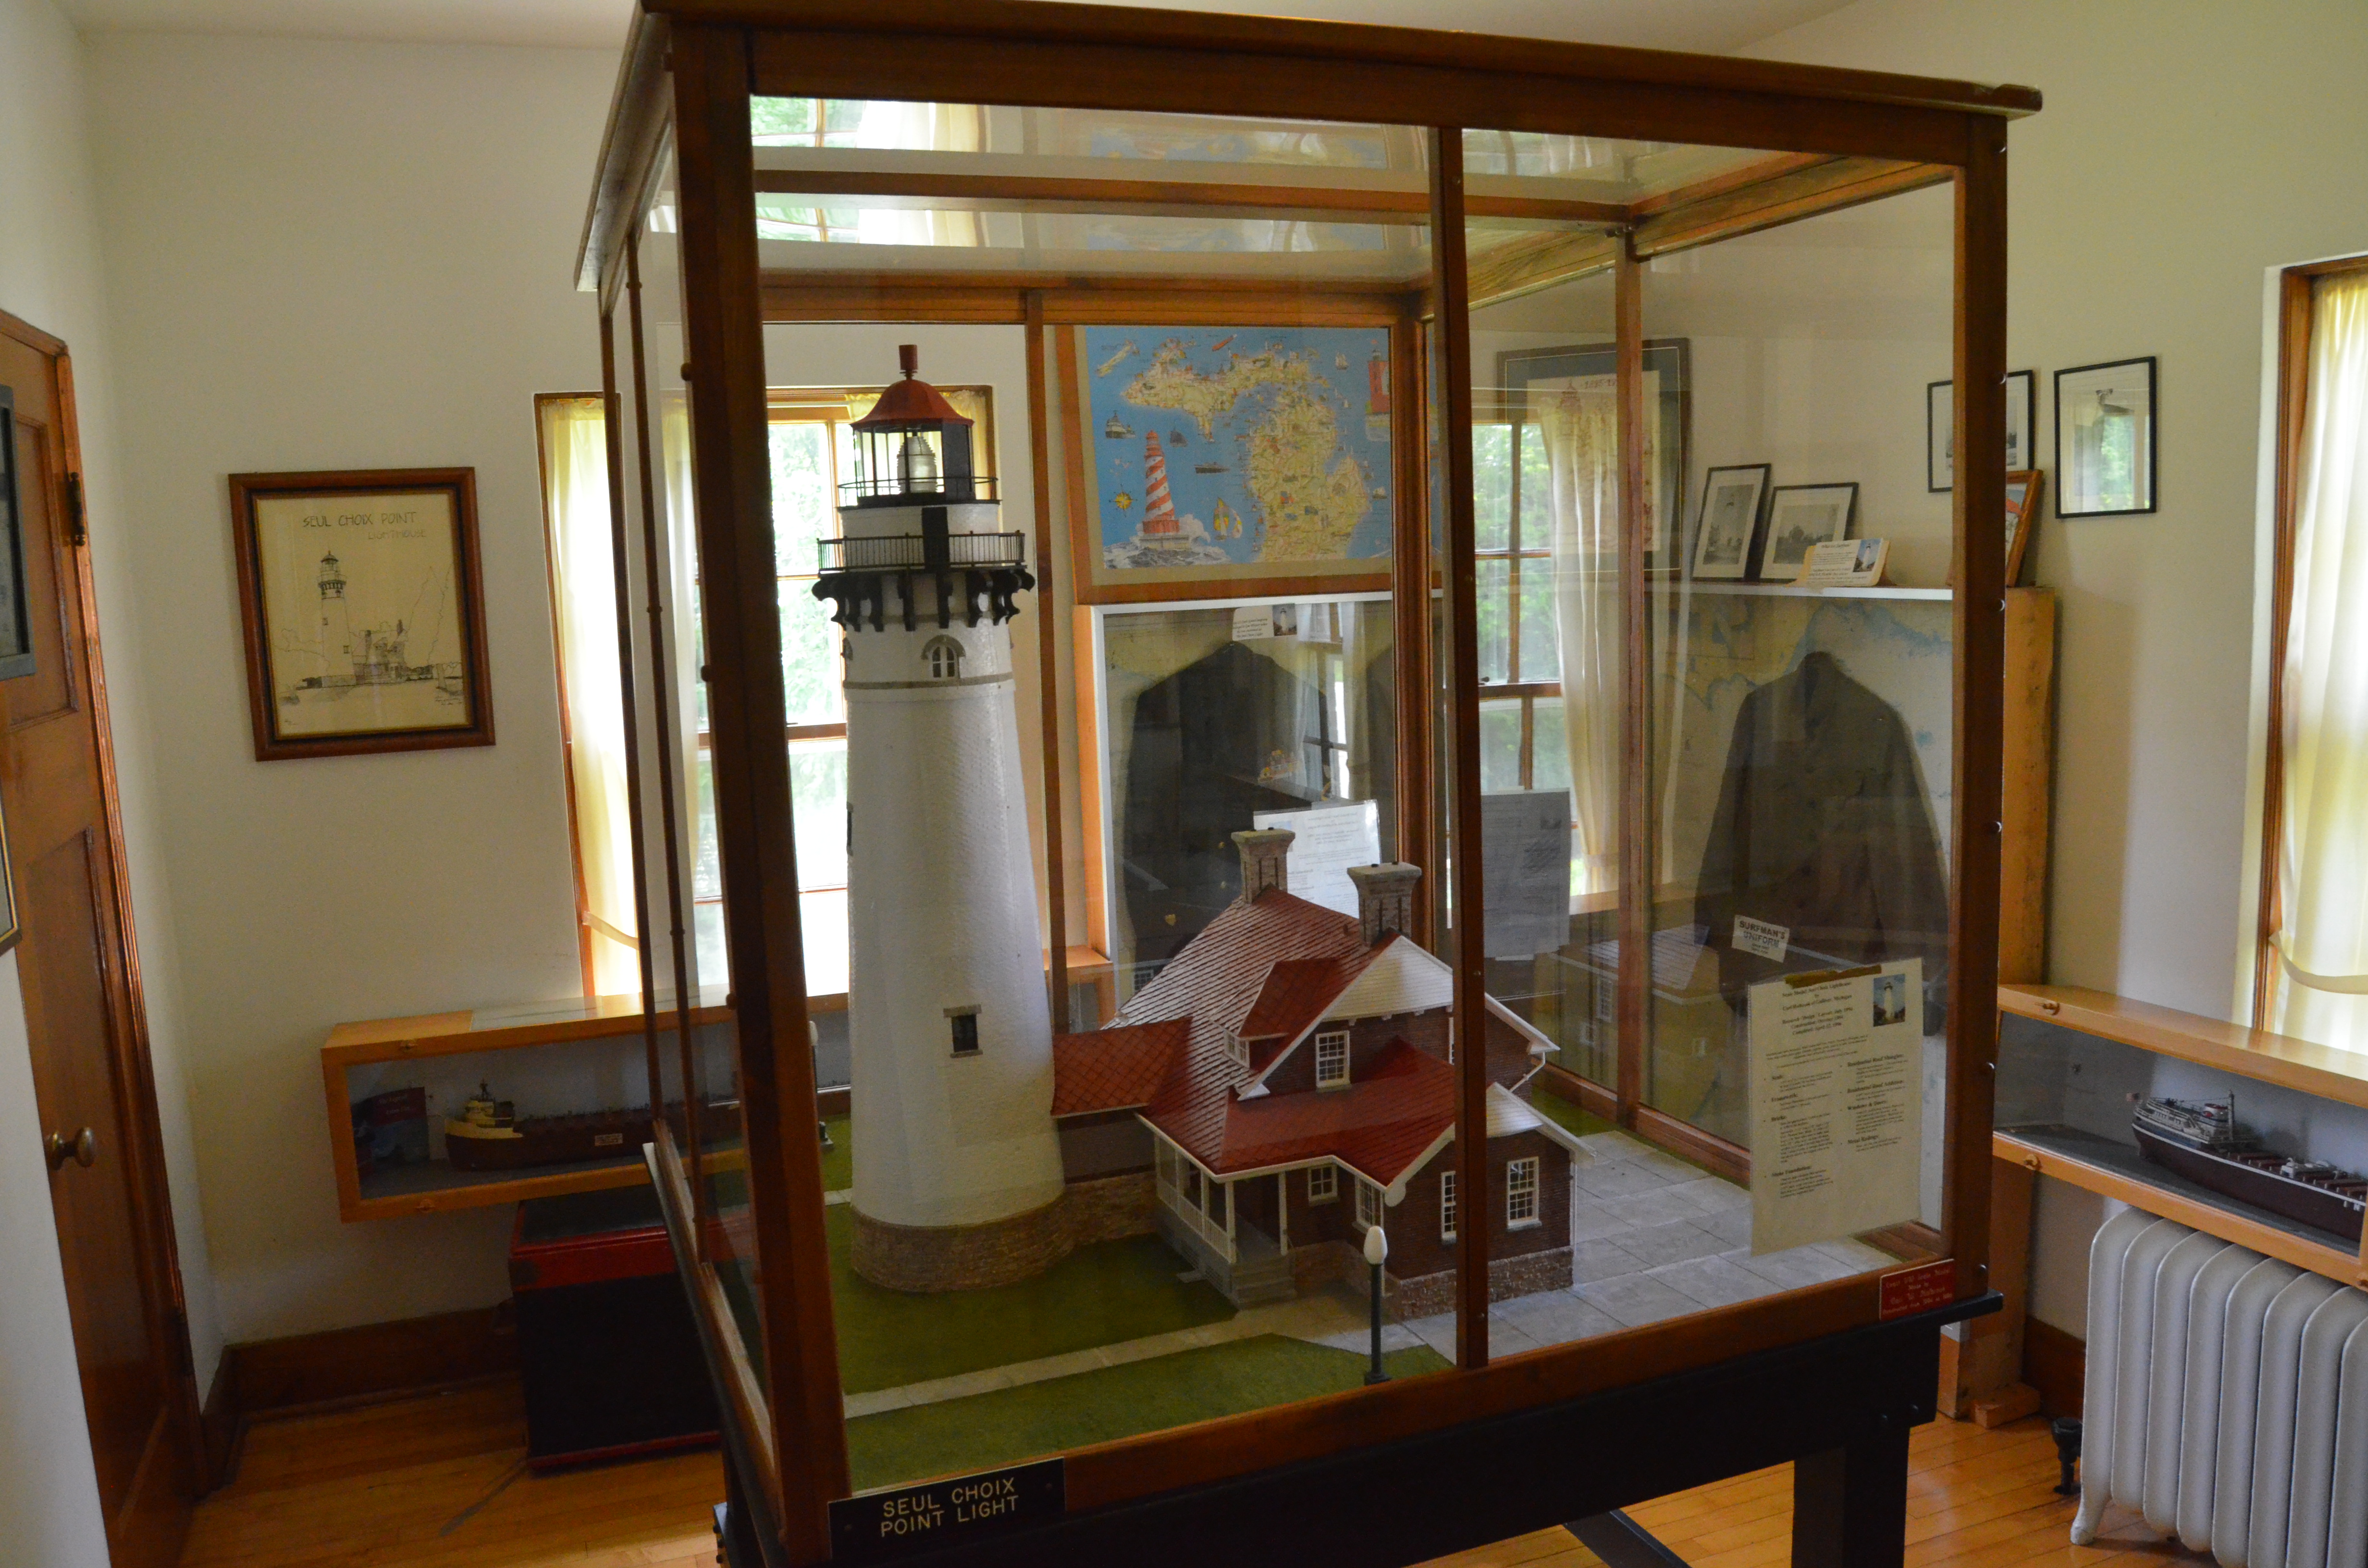 Seul Choix Point Lighthouse Mini Replica Michigan Museum